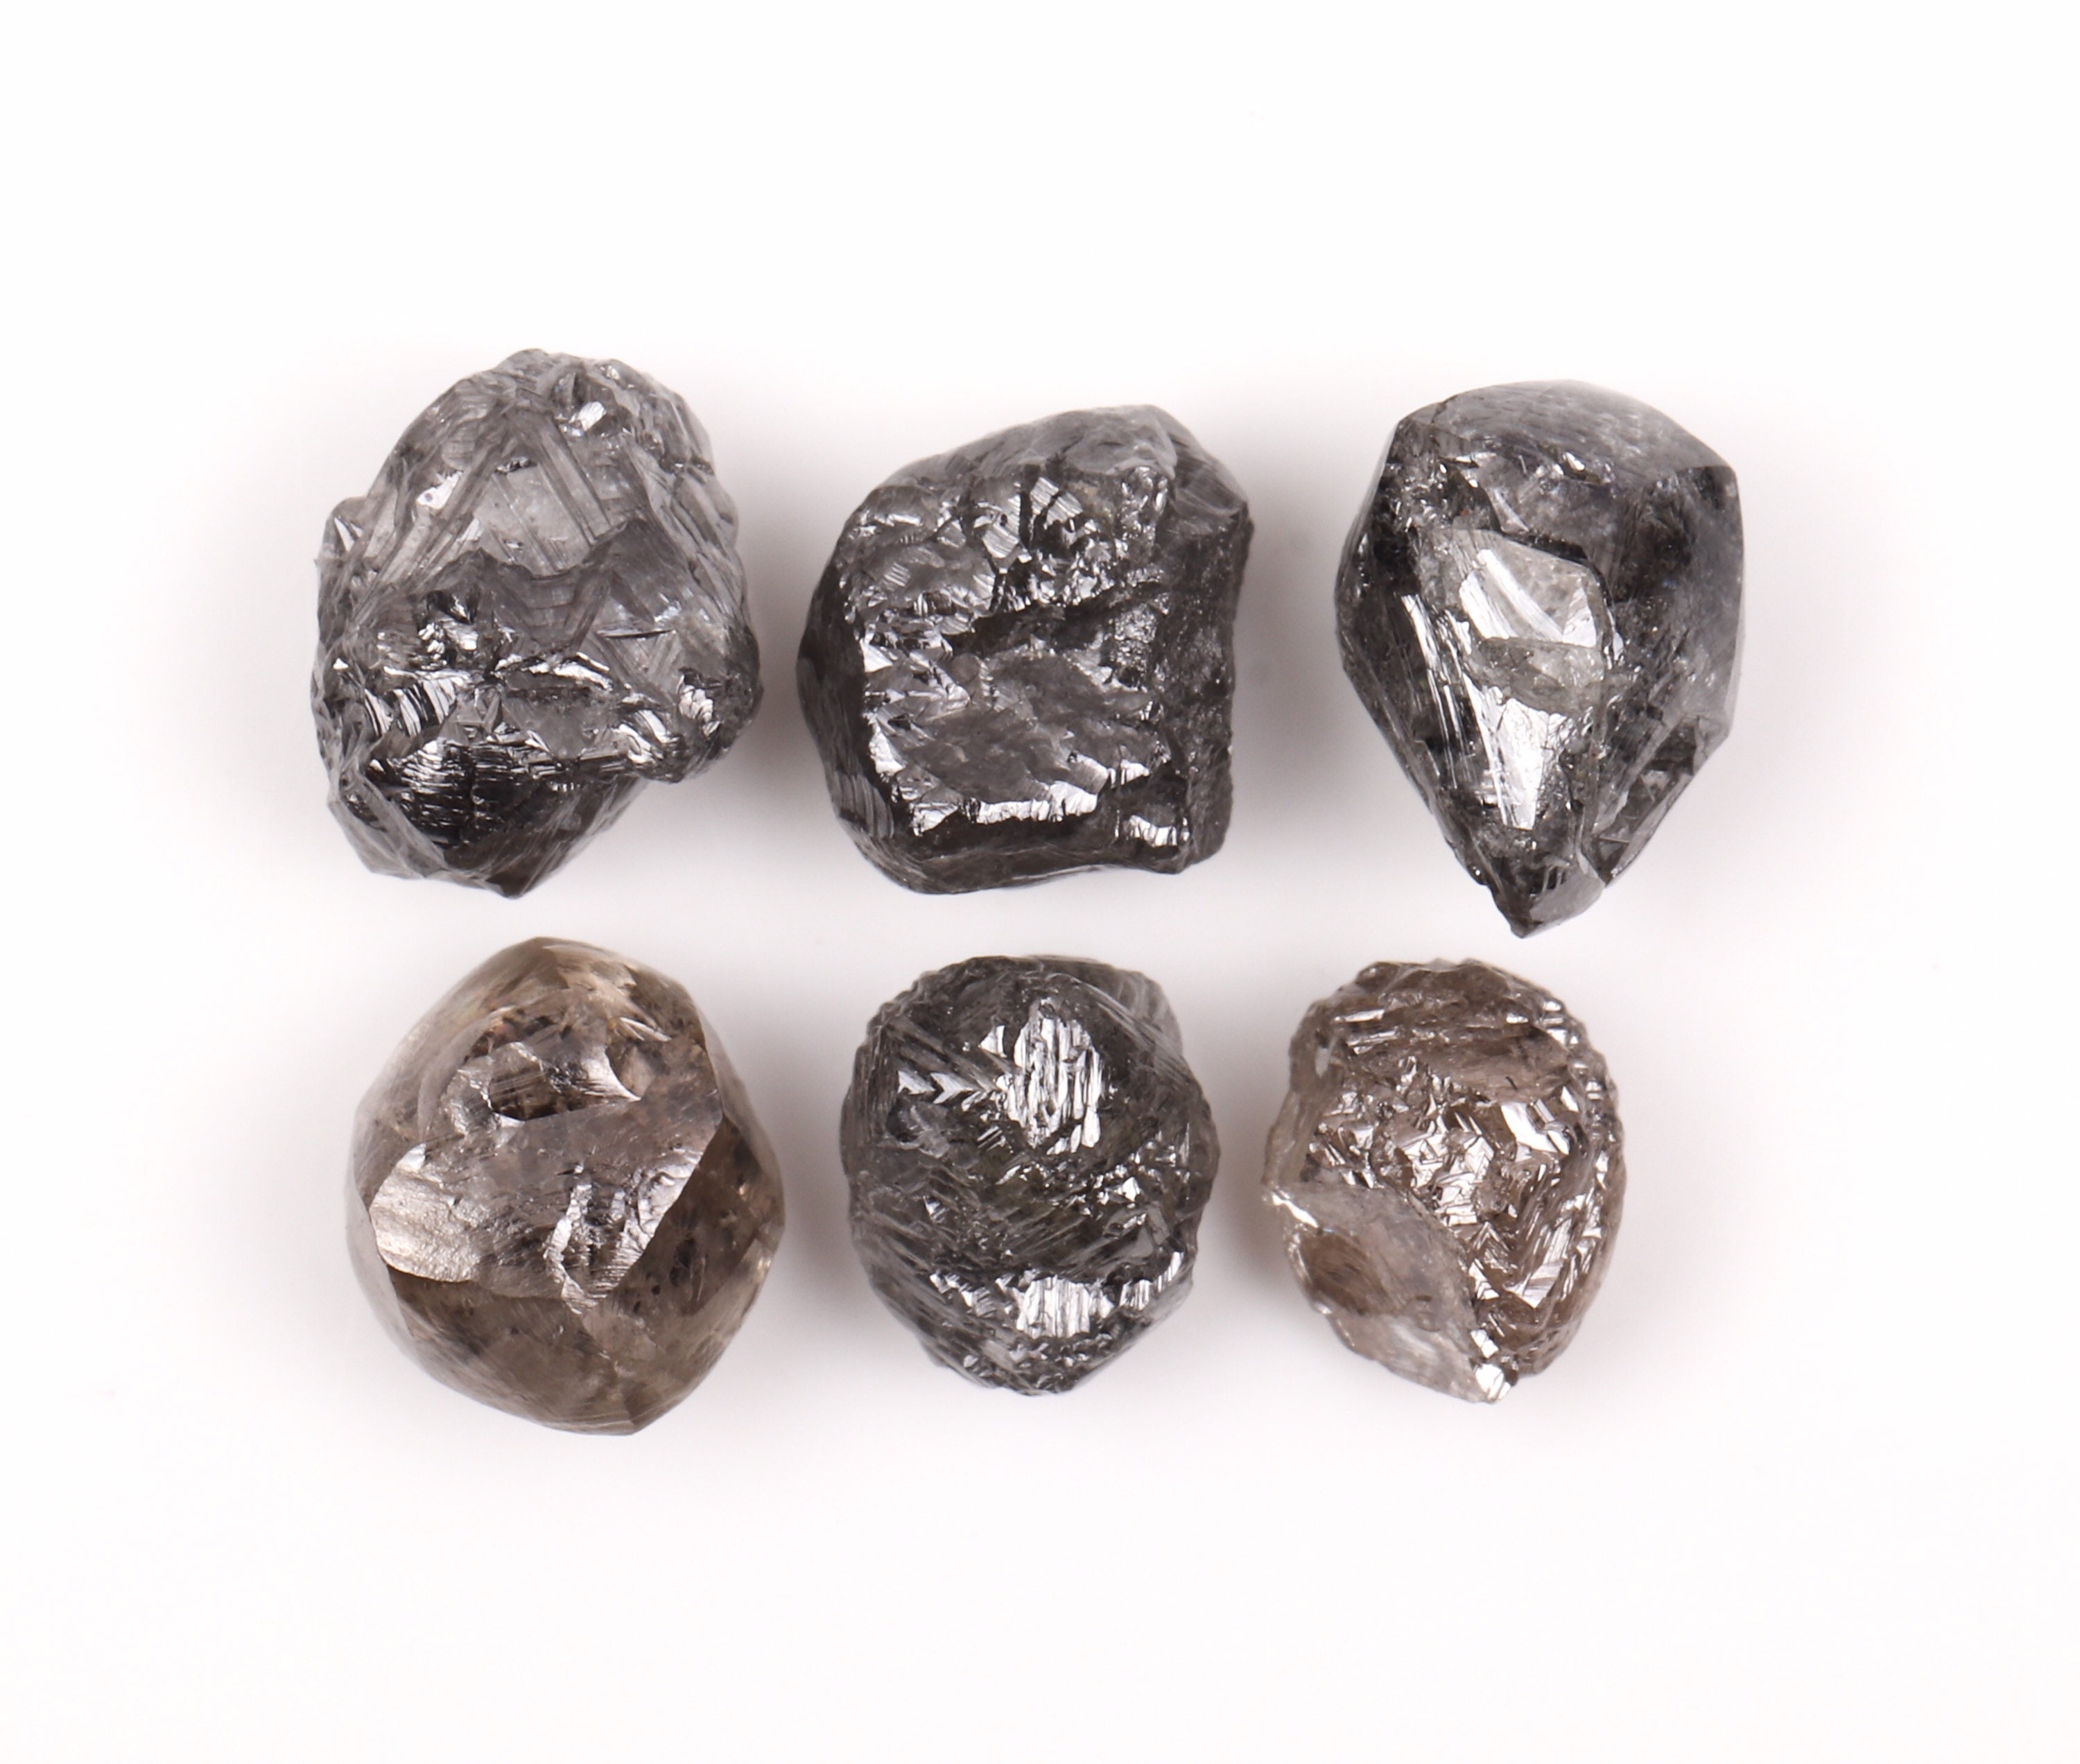 Carat ED06830020 - Foret diamant perçage à sec - 68 x 300 x 5/4 UNC